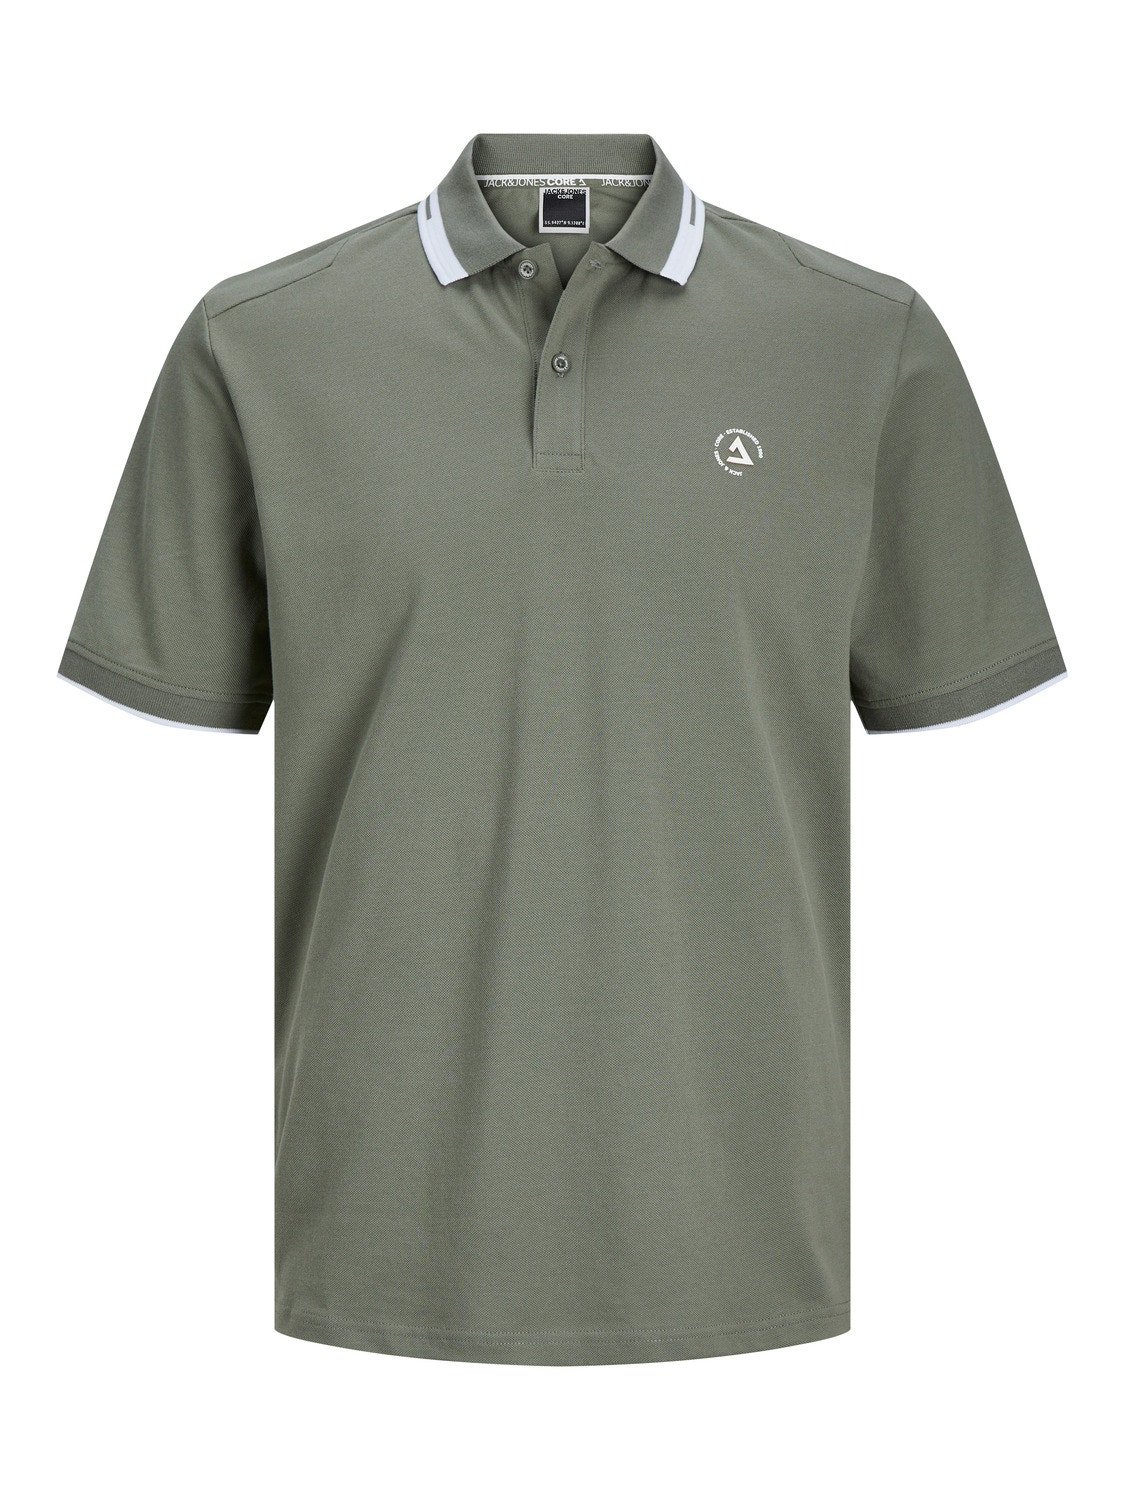 Jack & Jones Plus Size Einfarbig T-shirt -Agave Green - 12257374